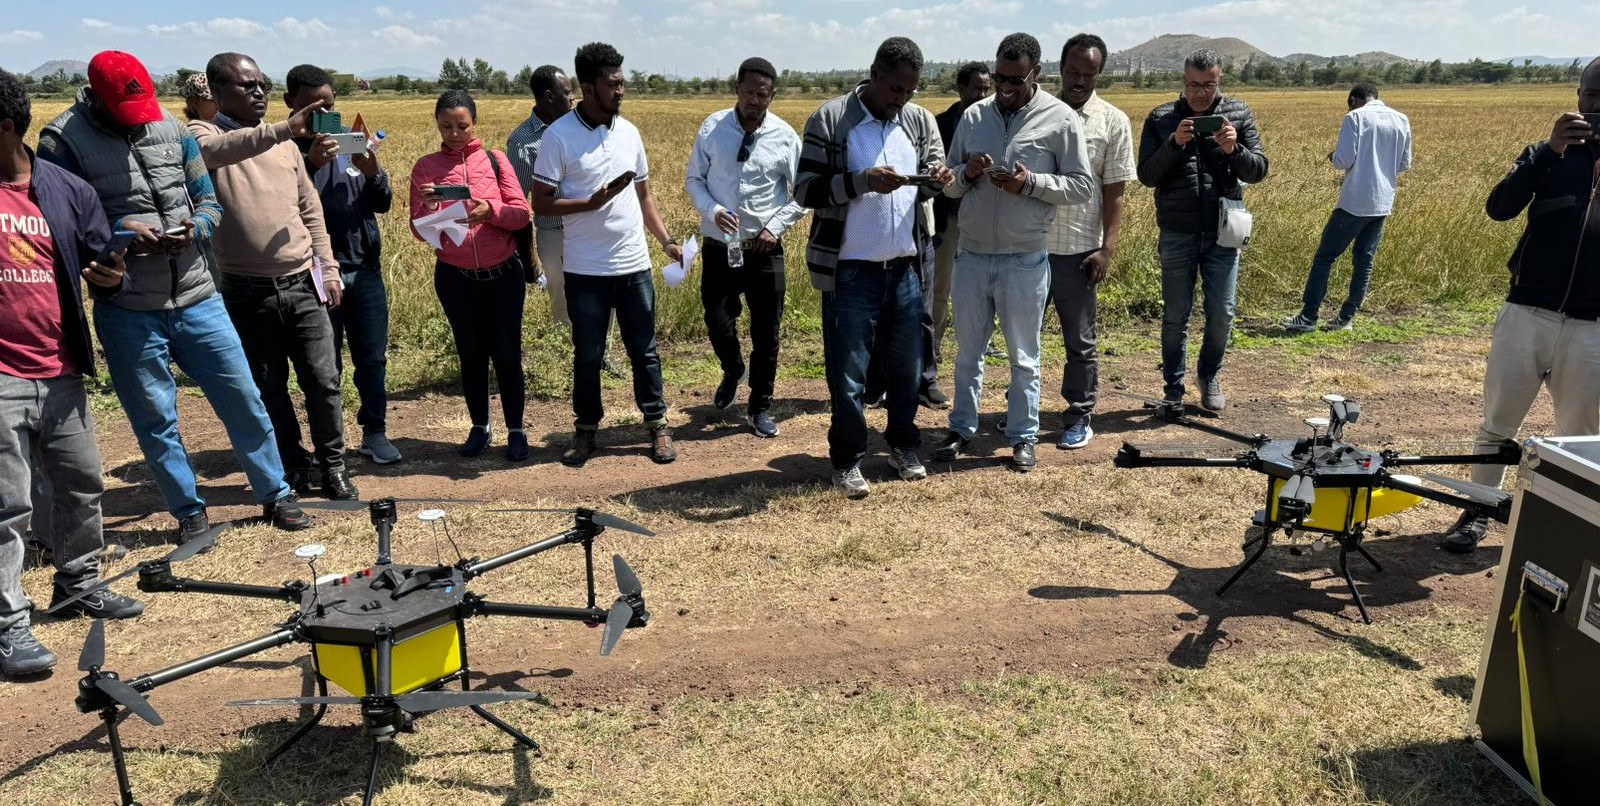 DAIH Ethiopia training of trainers drone technologies